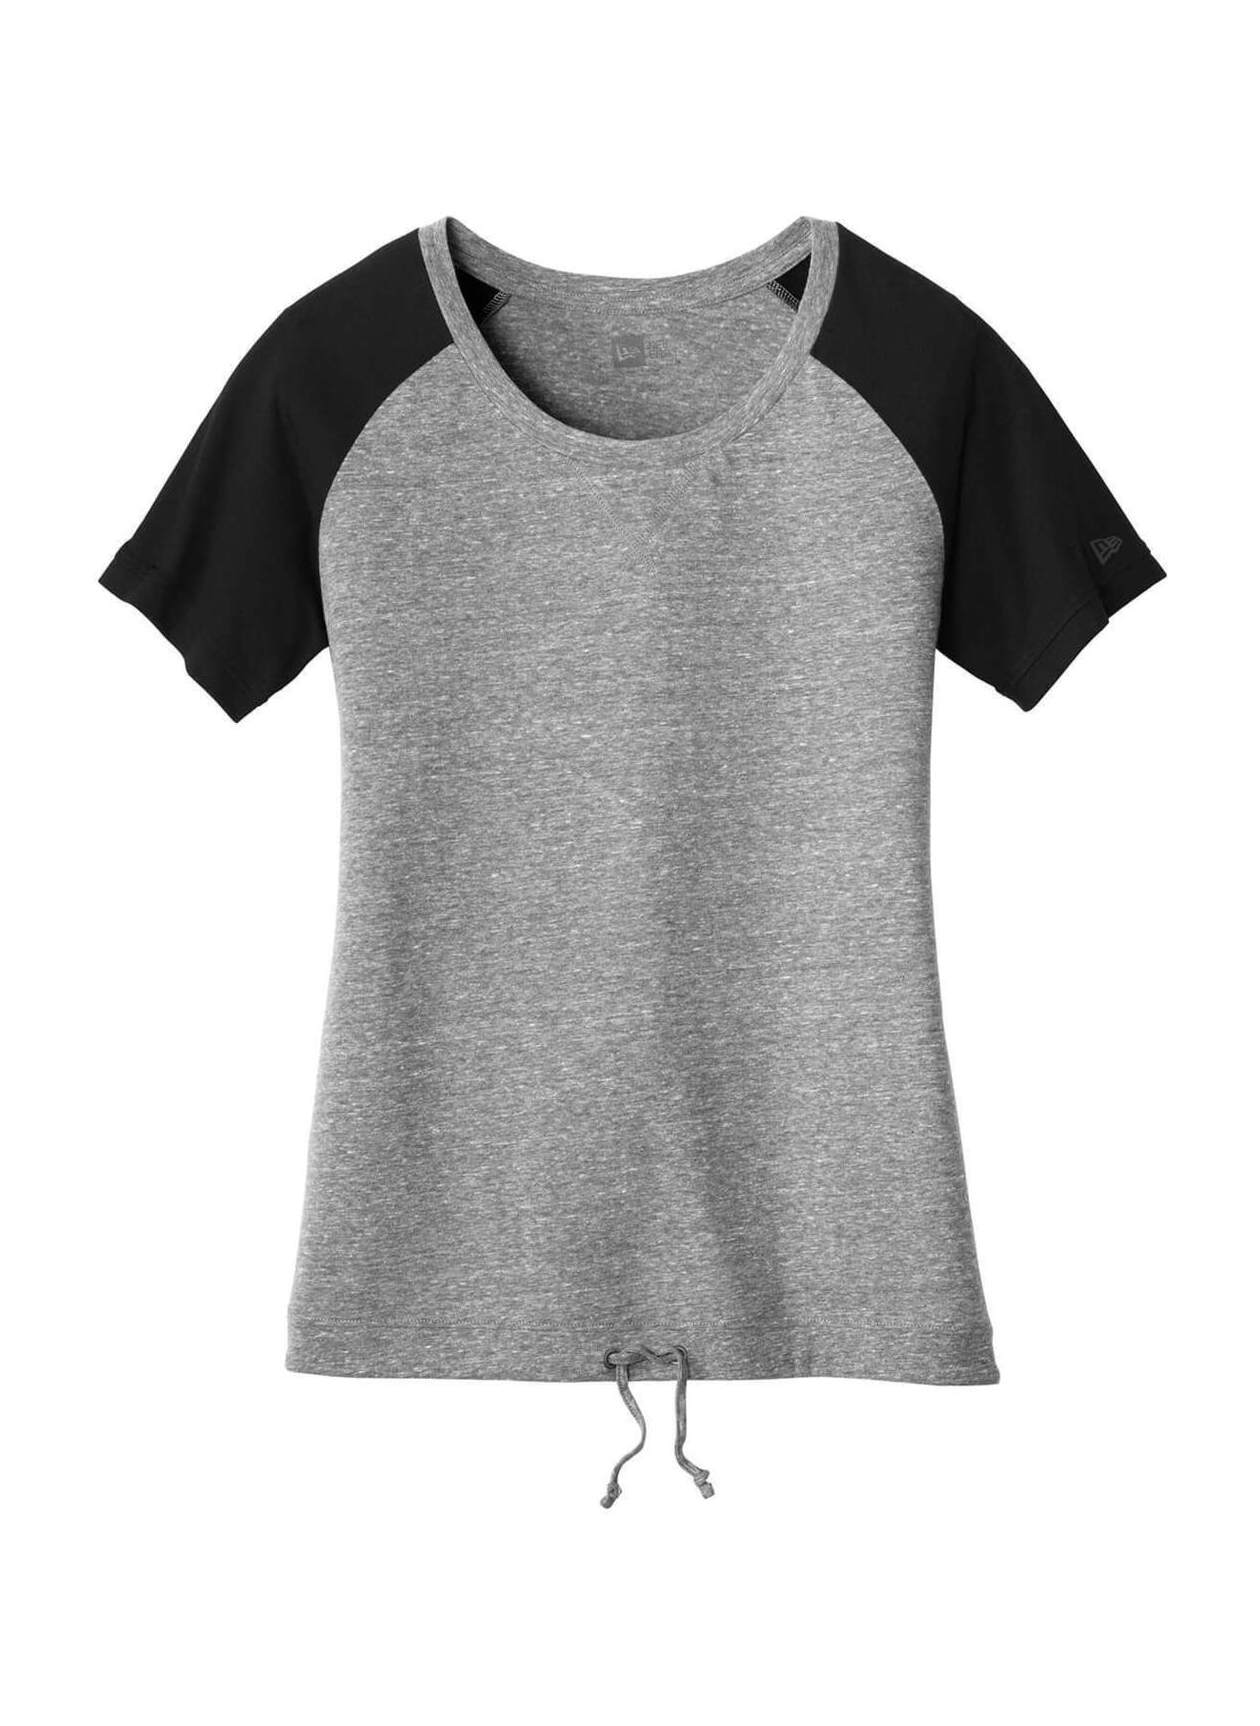 New Era Women's Shadow Grey / Black Tri-Blend Performance Cinch T-Shirt